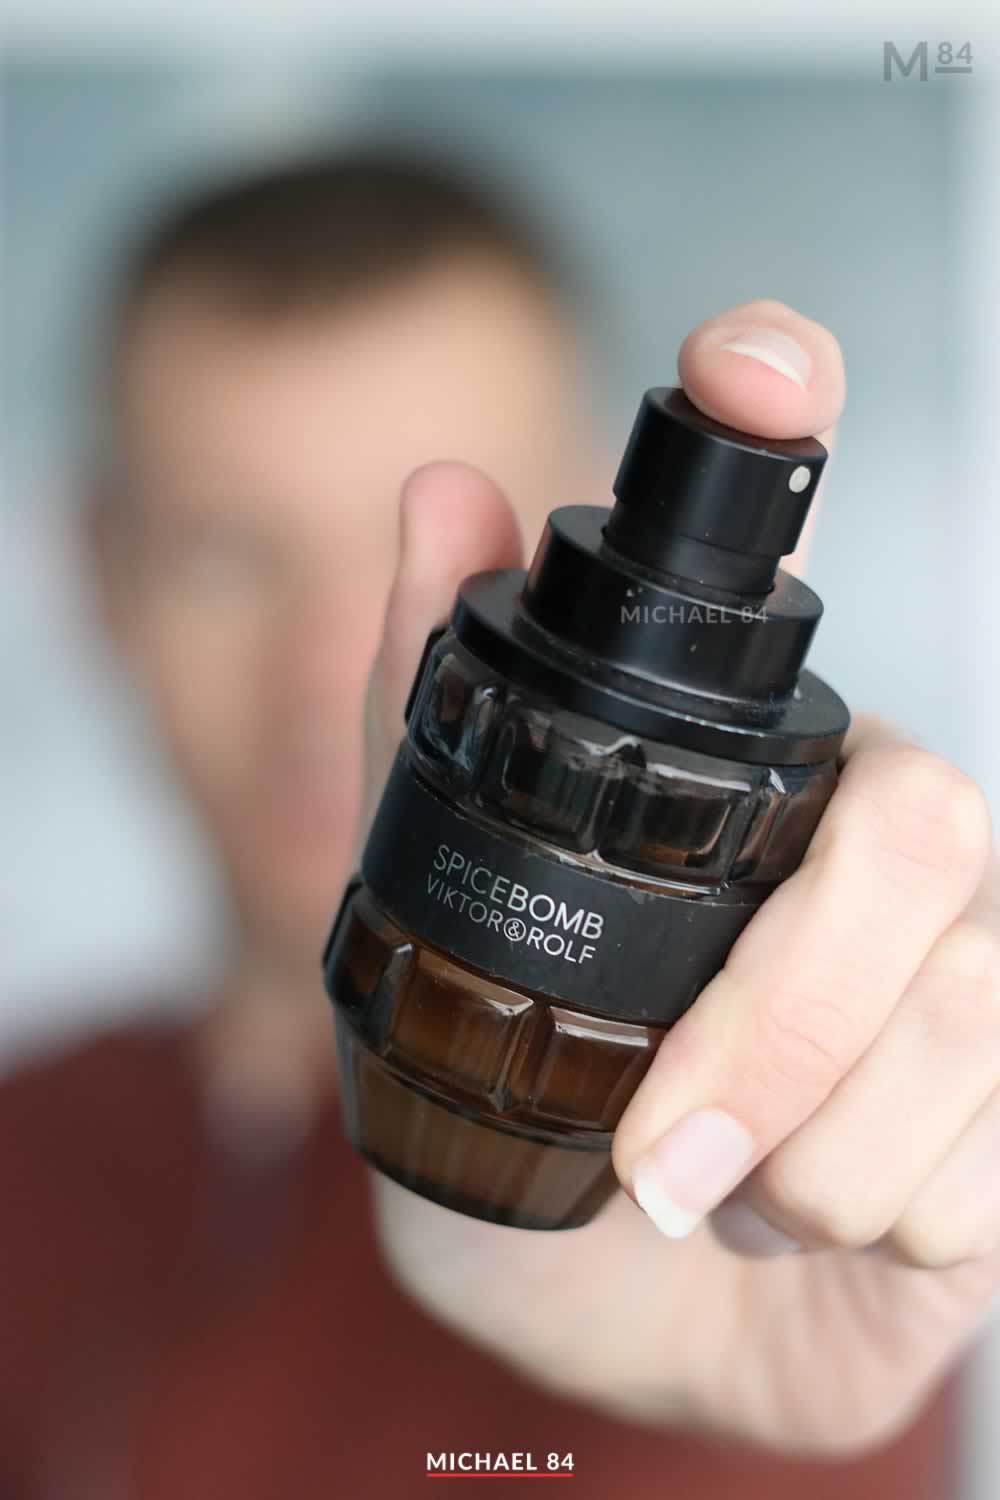 Viktor & Rolf Spicebomb Men's Fragrance Review: Here's What It Smells Like